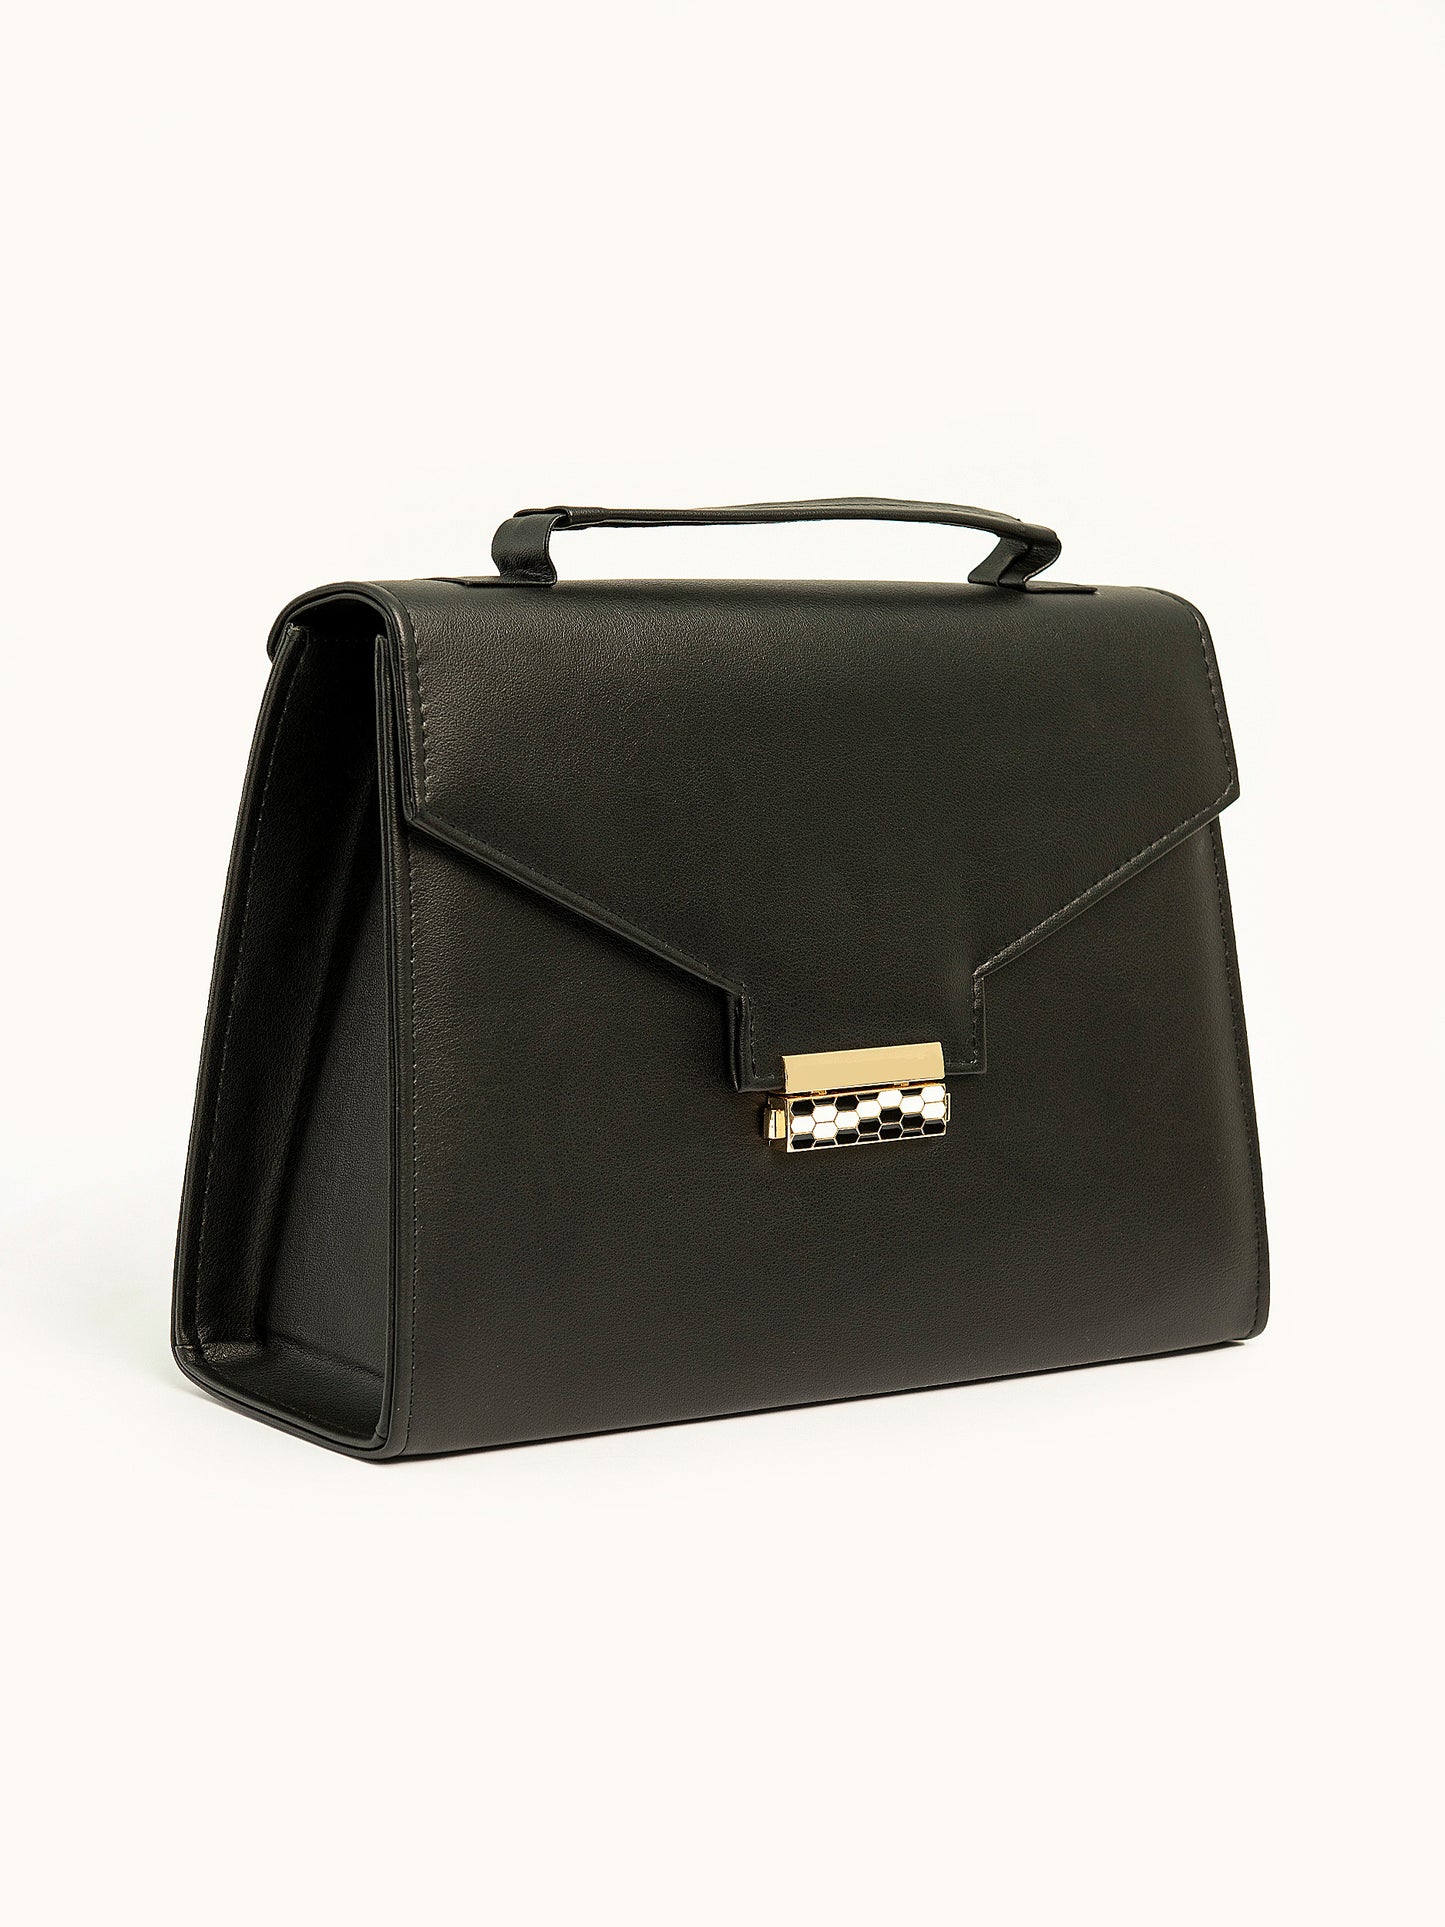 Box Style Handbag